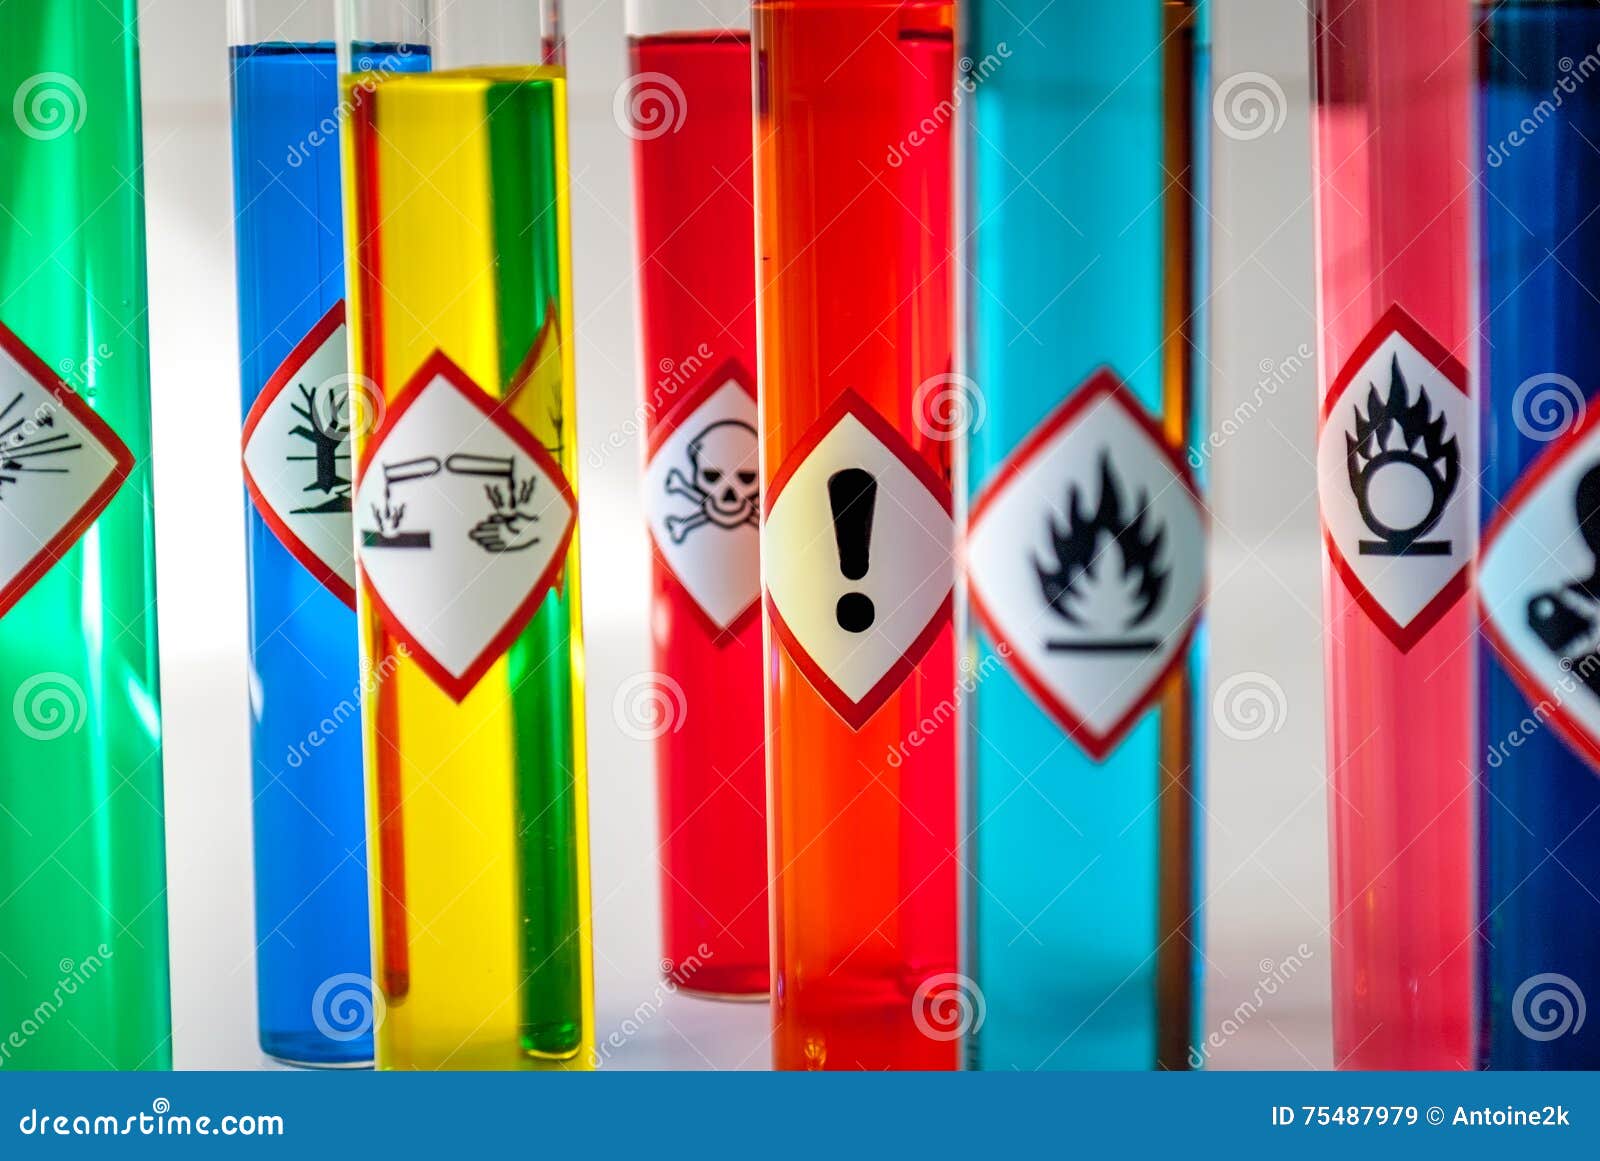 chemical health hazard pictogram